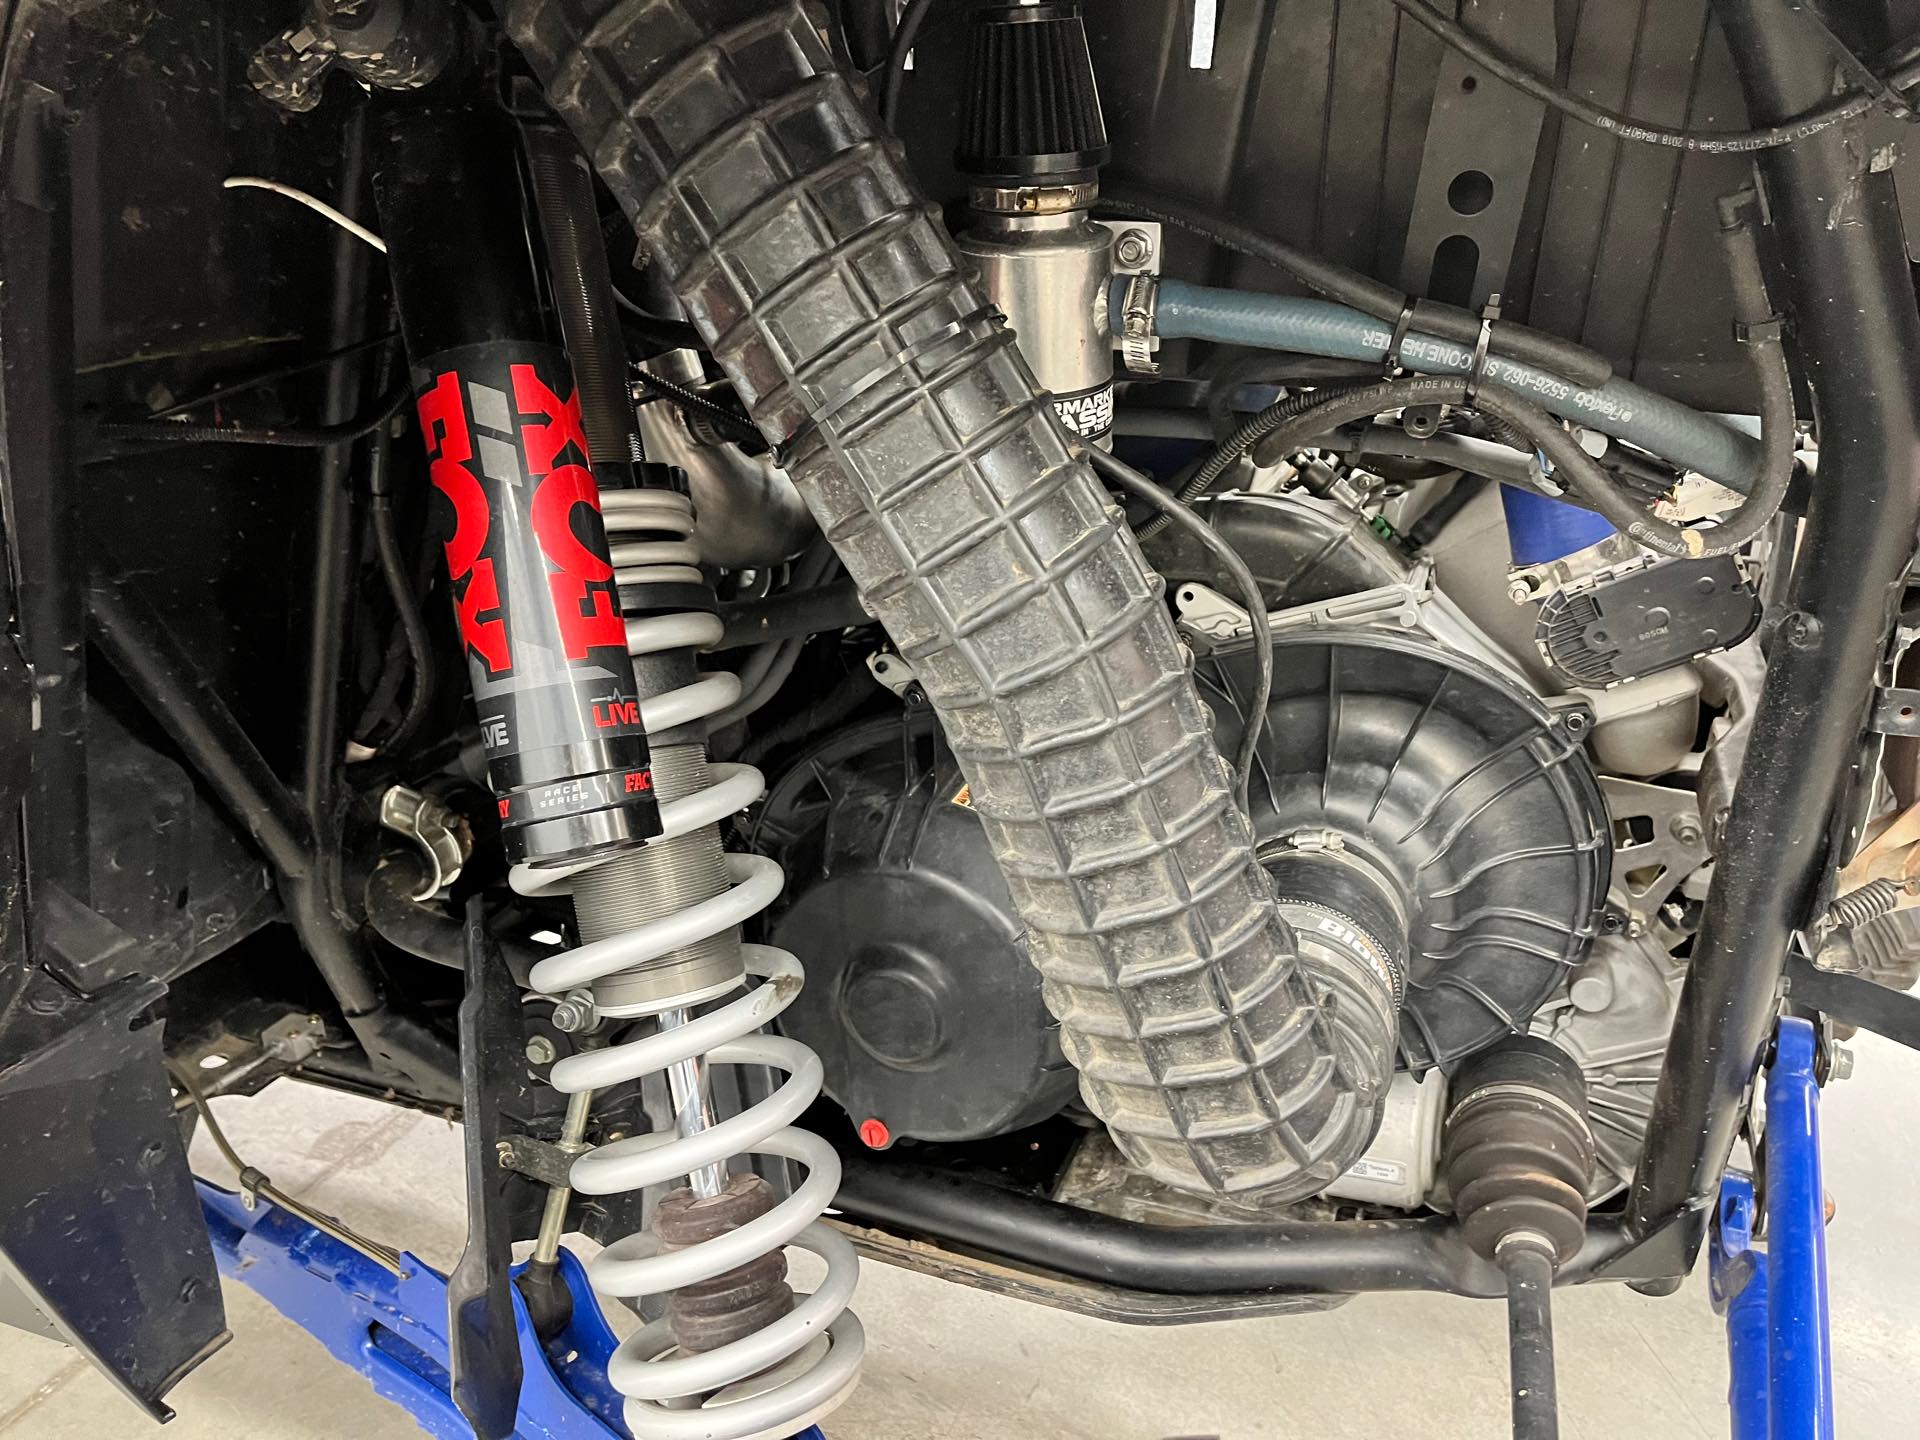 2019 Polaris RZR XP 4 Turbo S Base at Aces Motorcycles - Denver